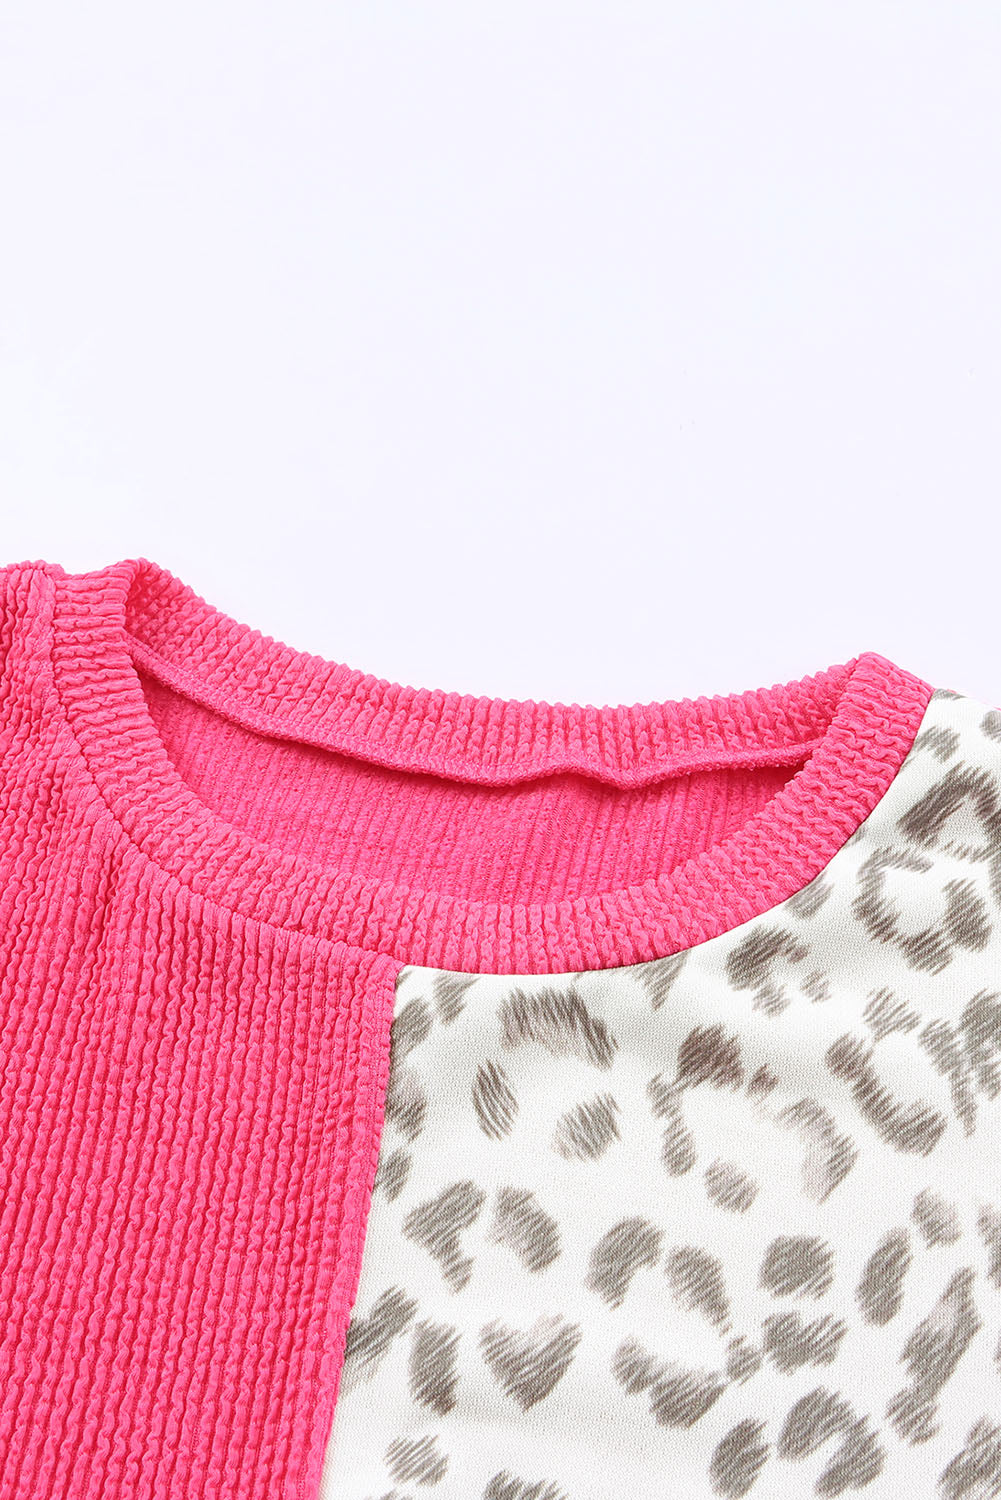 Cheetah Print Color Block Casual Pullover Long Sleeve Top